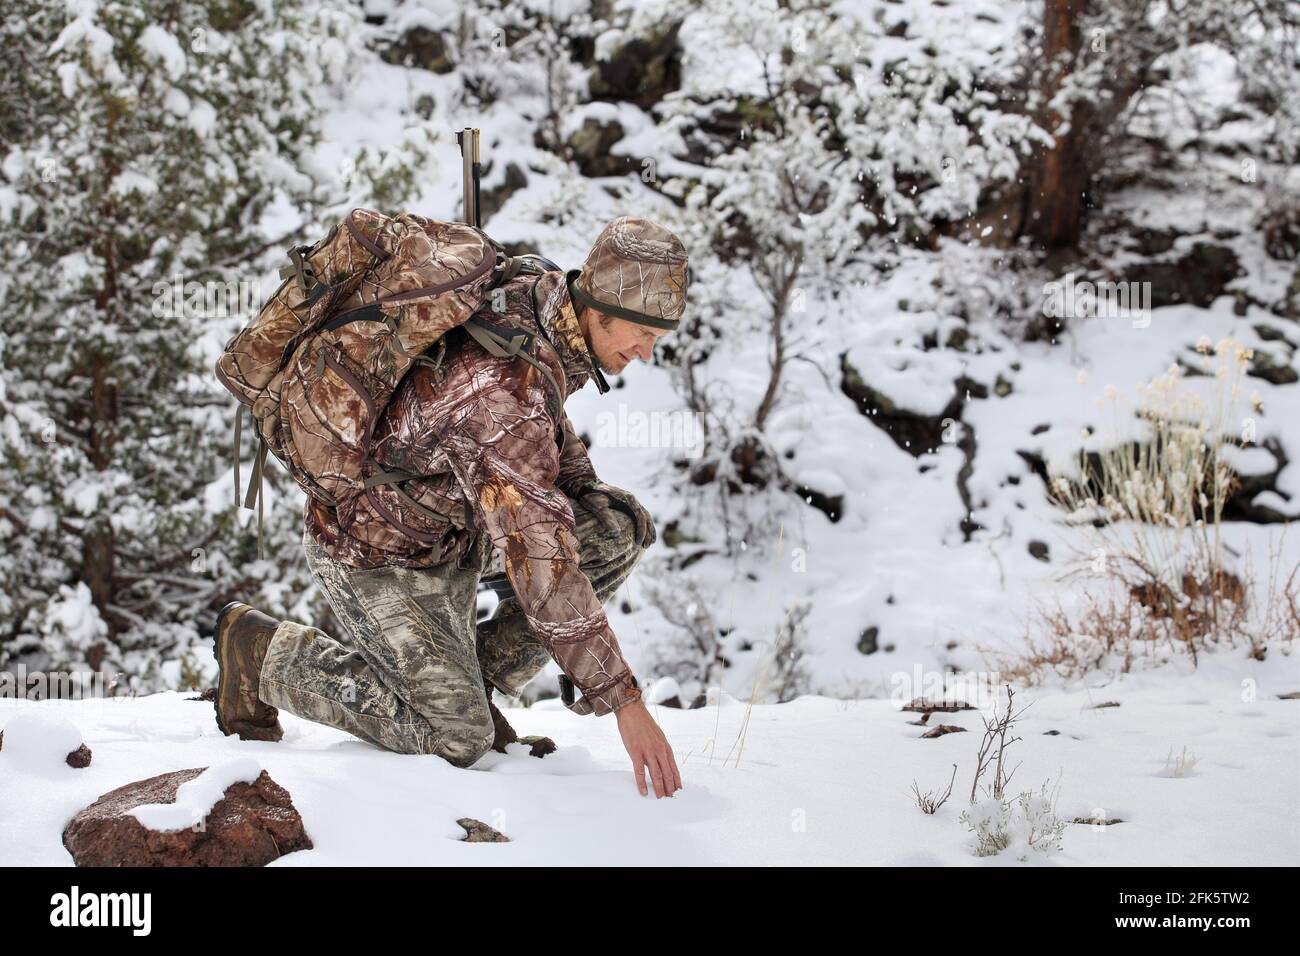 gun hunter in snowy scene kneeling to inspect deer tracks Stock Photo